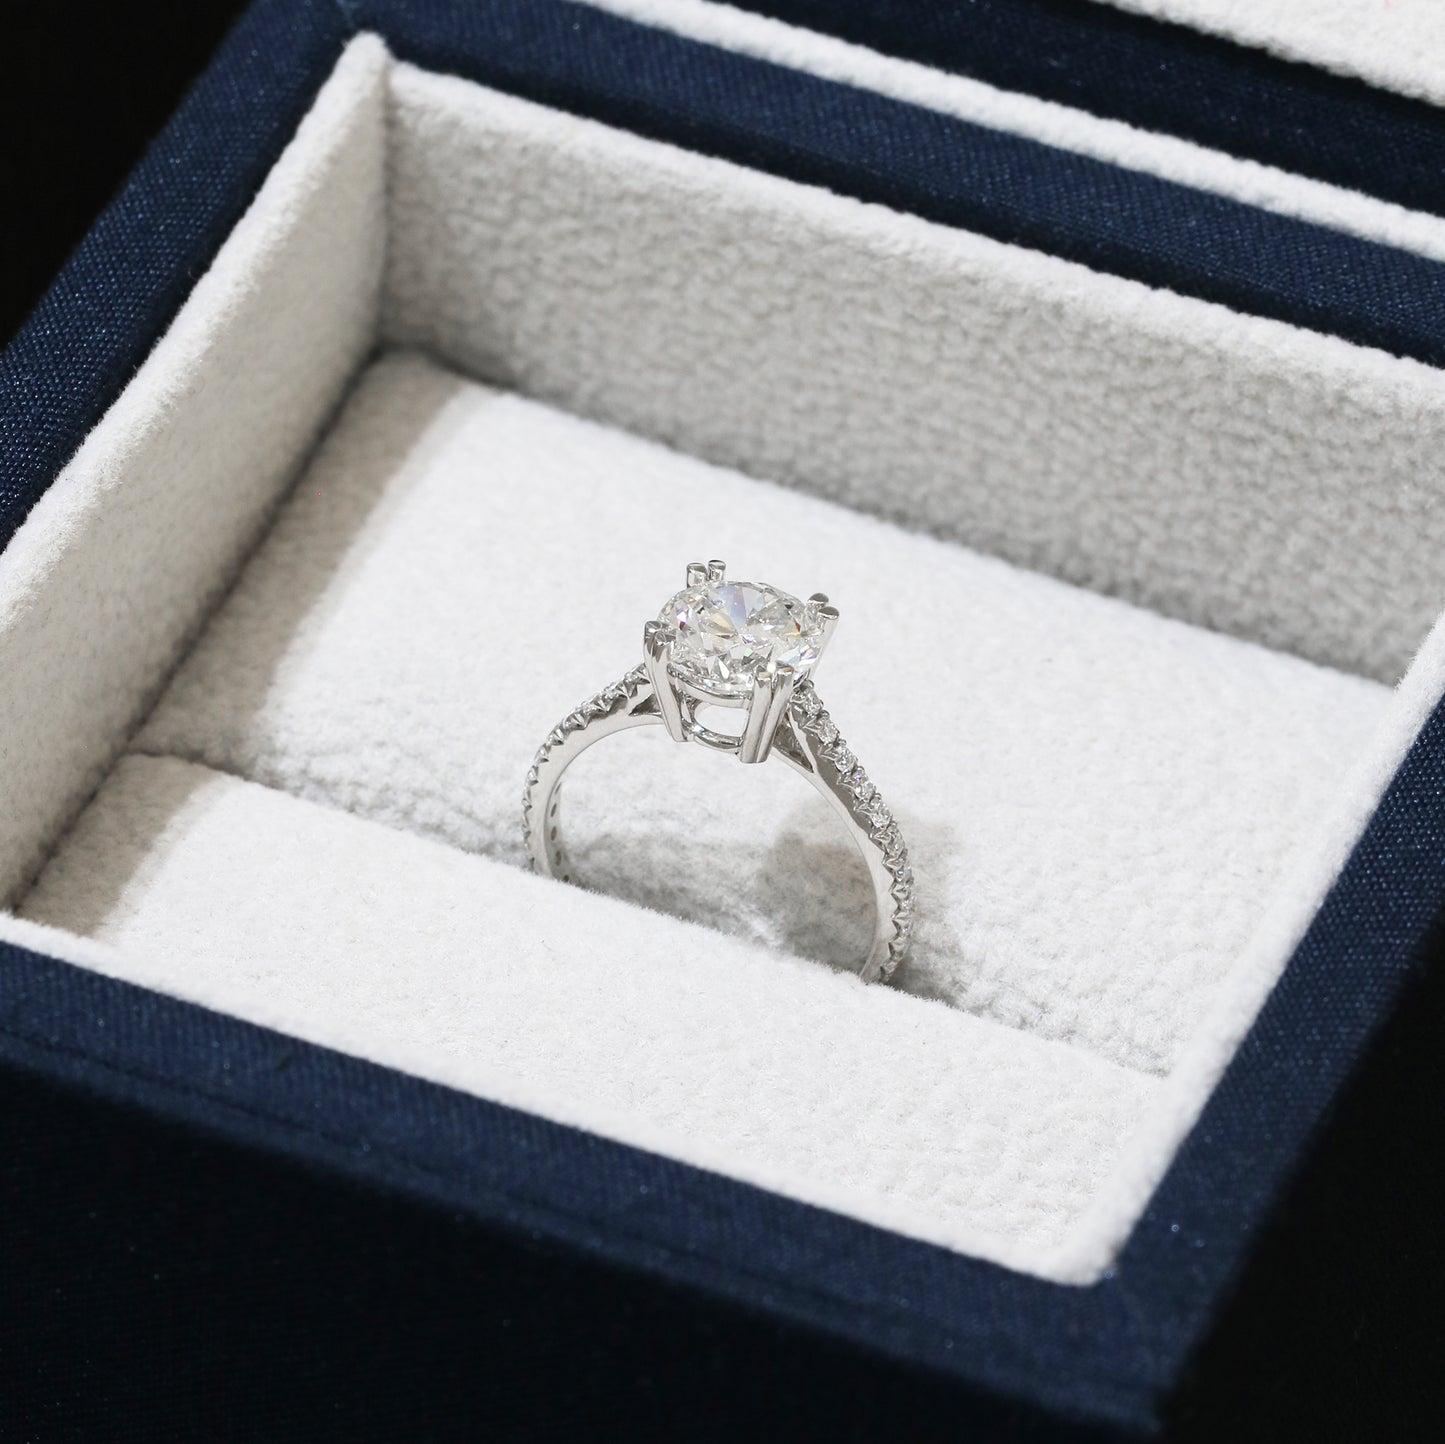 Cosmos Eternity 18k白金雙四爪永恆求婚鑽石戒指款式 18k White Gold Double Claw 4 Prongs Round Brilliant Diamond Engagement Ring Setting